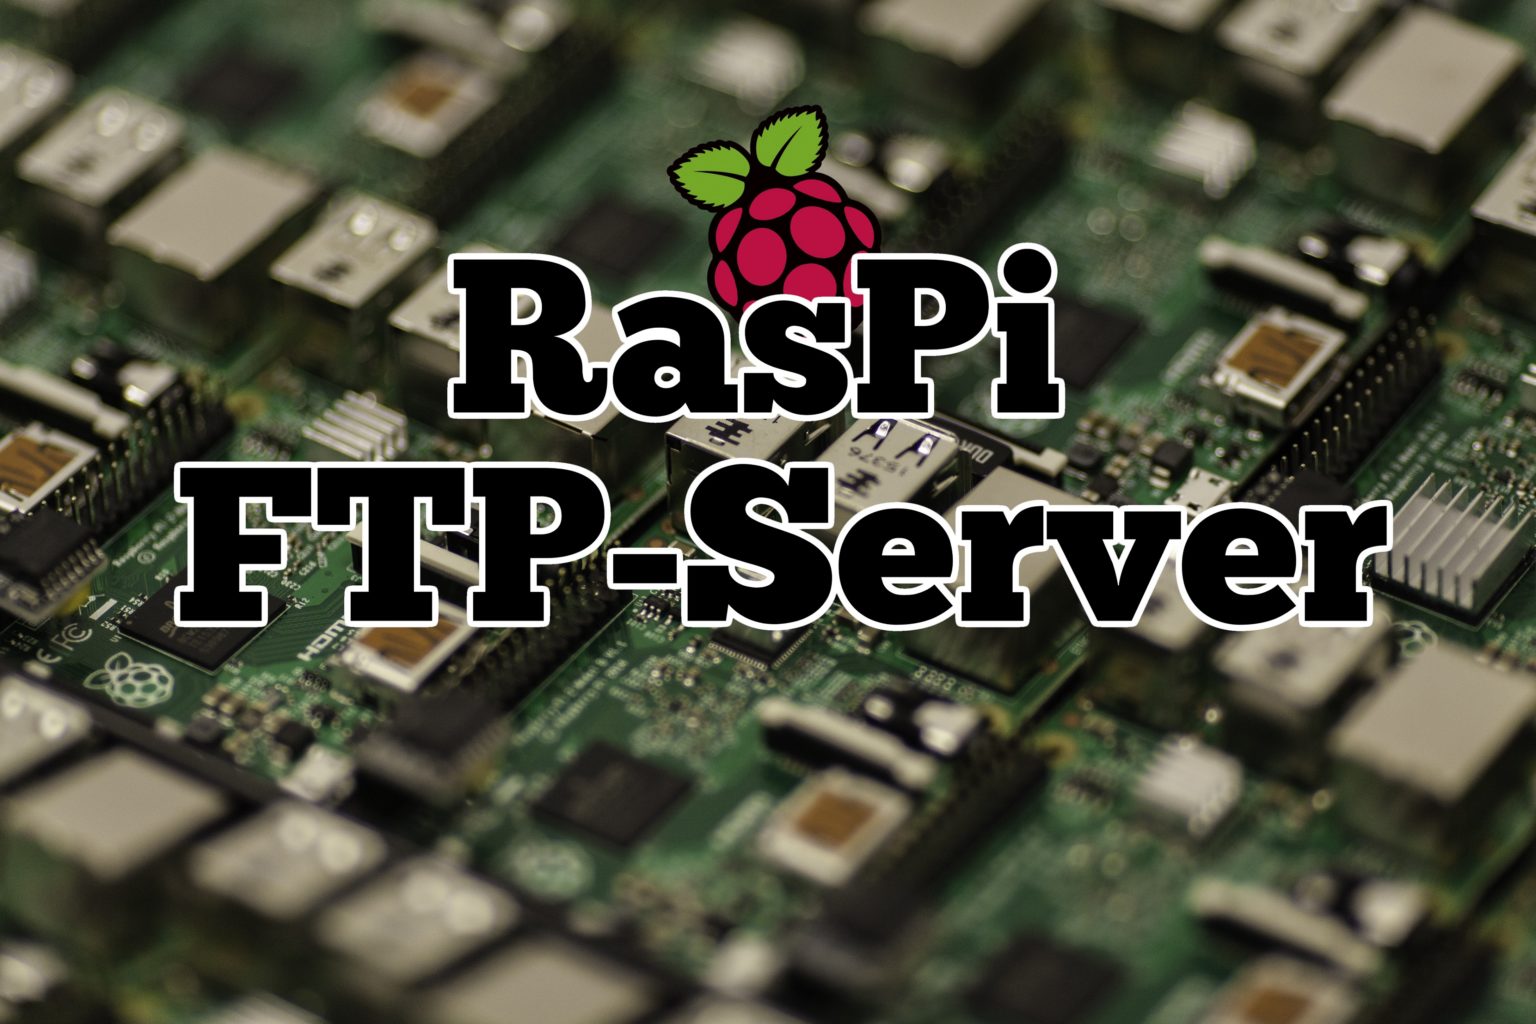 raspberry pi ftp server image